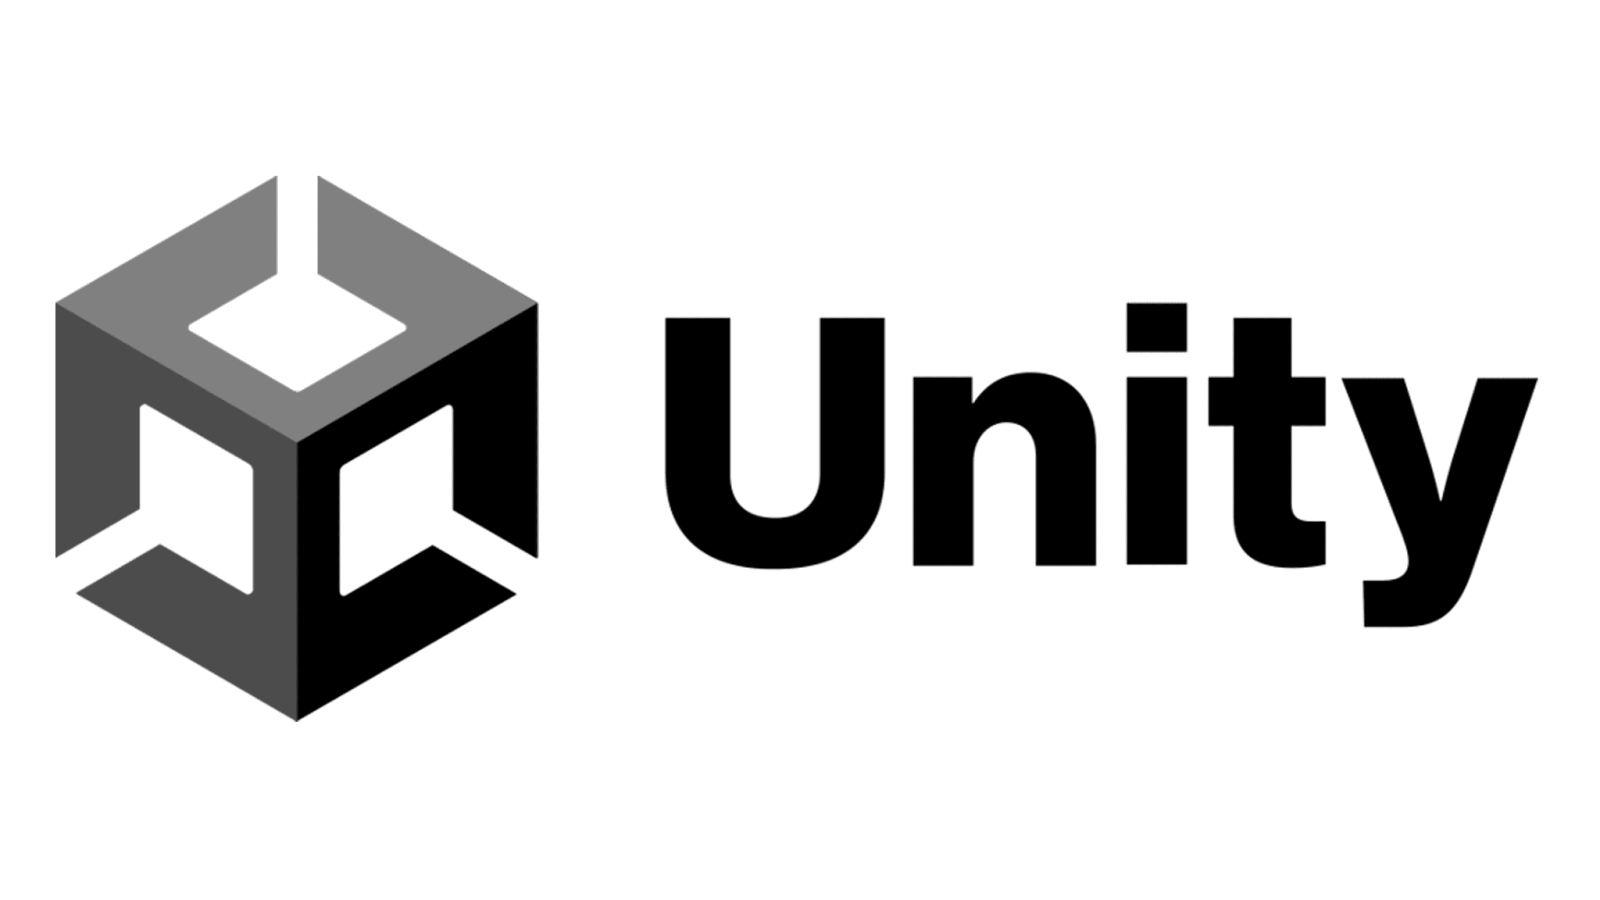 the unity logo